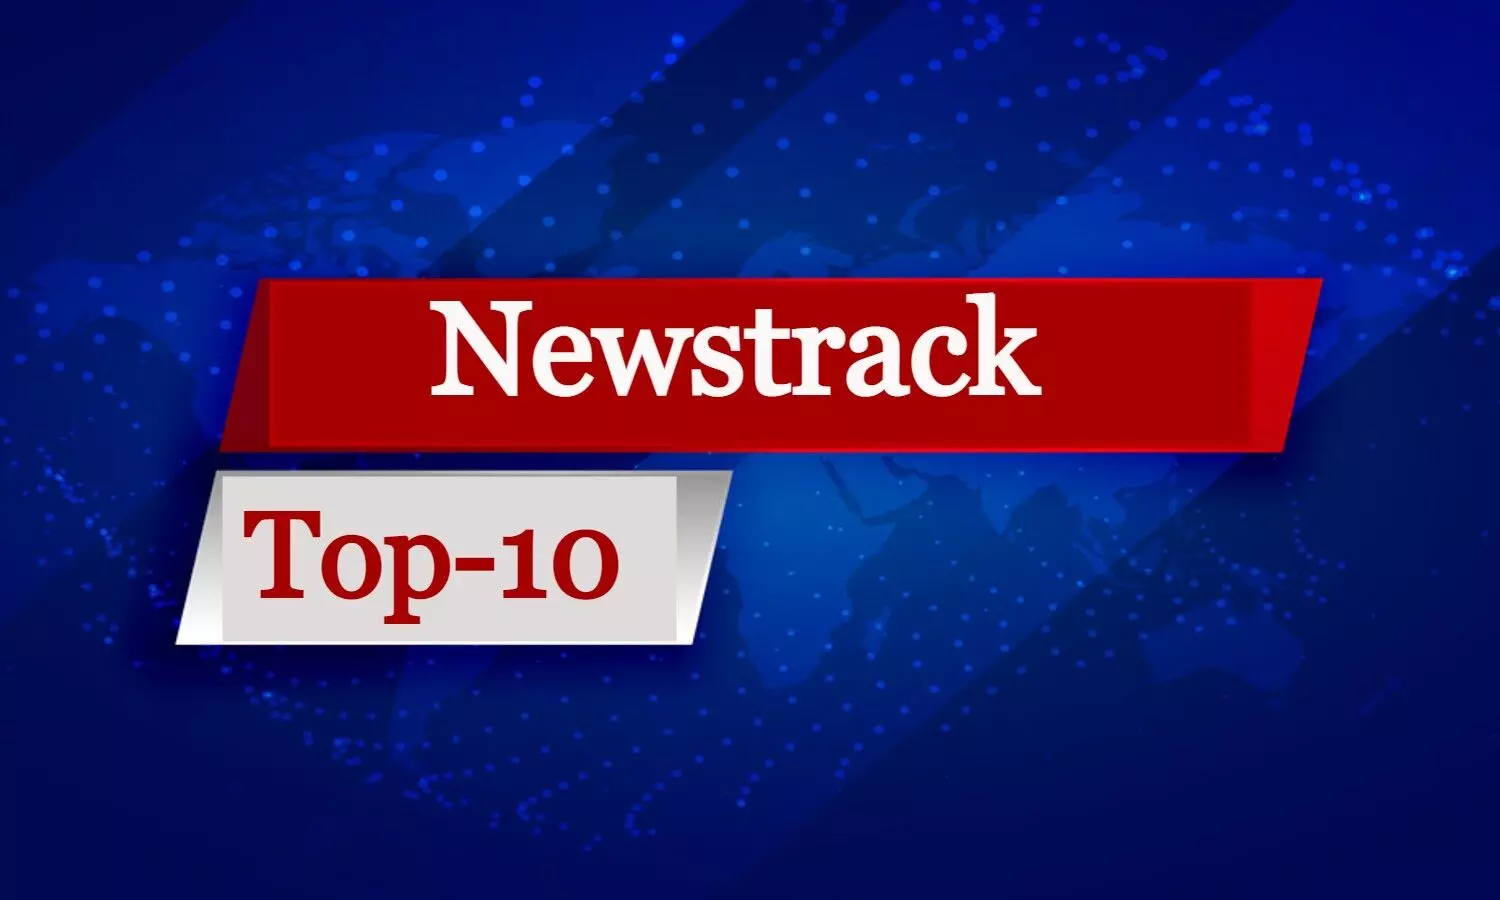 Newstrack Top-10